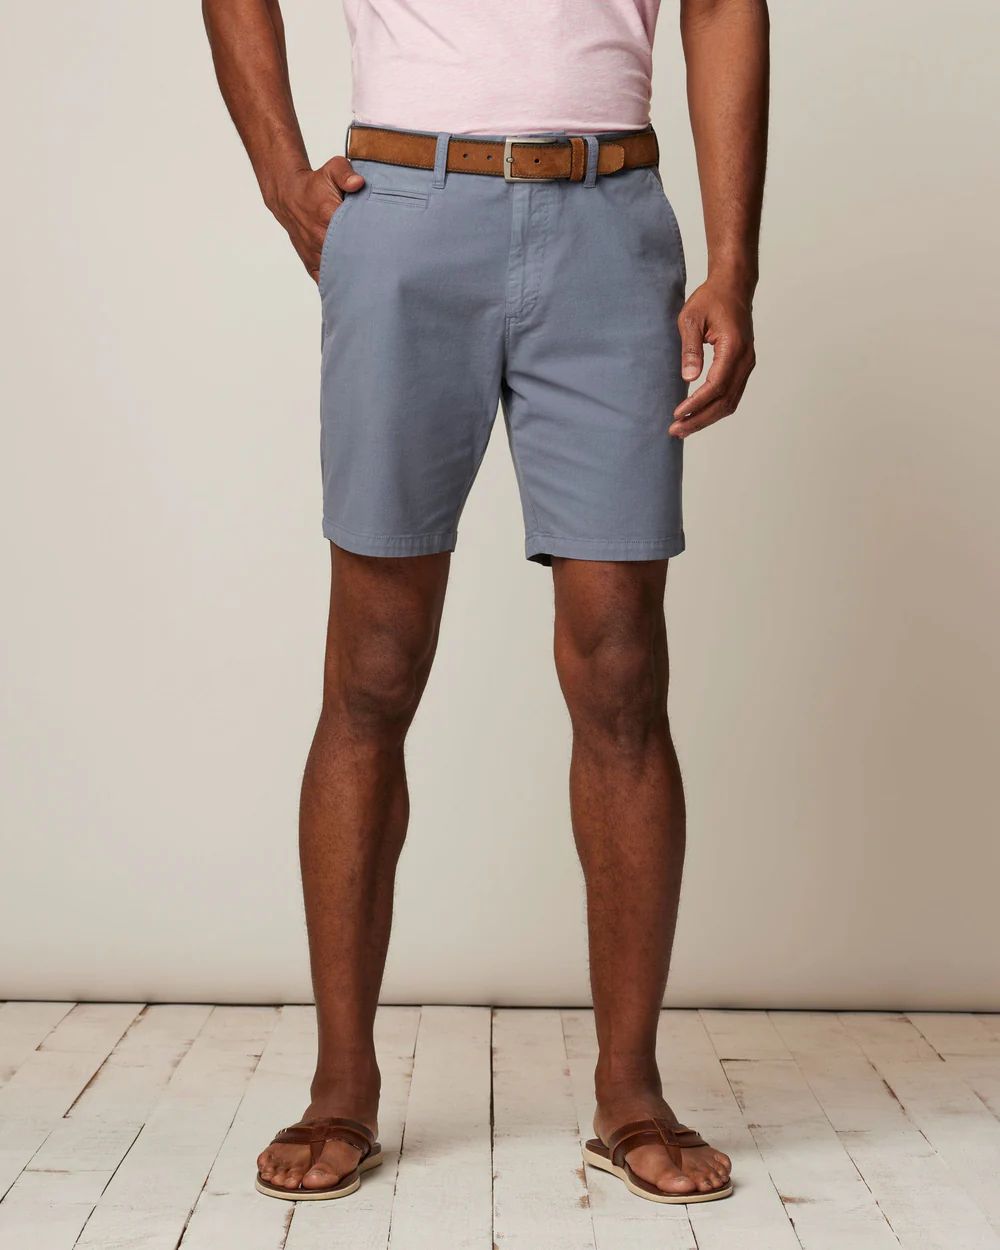 Men's Preppy Shorts - Santiago Cotton Stretch Shorts | johnnie O